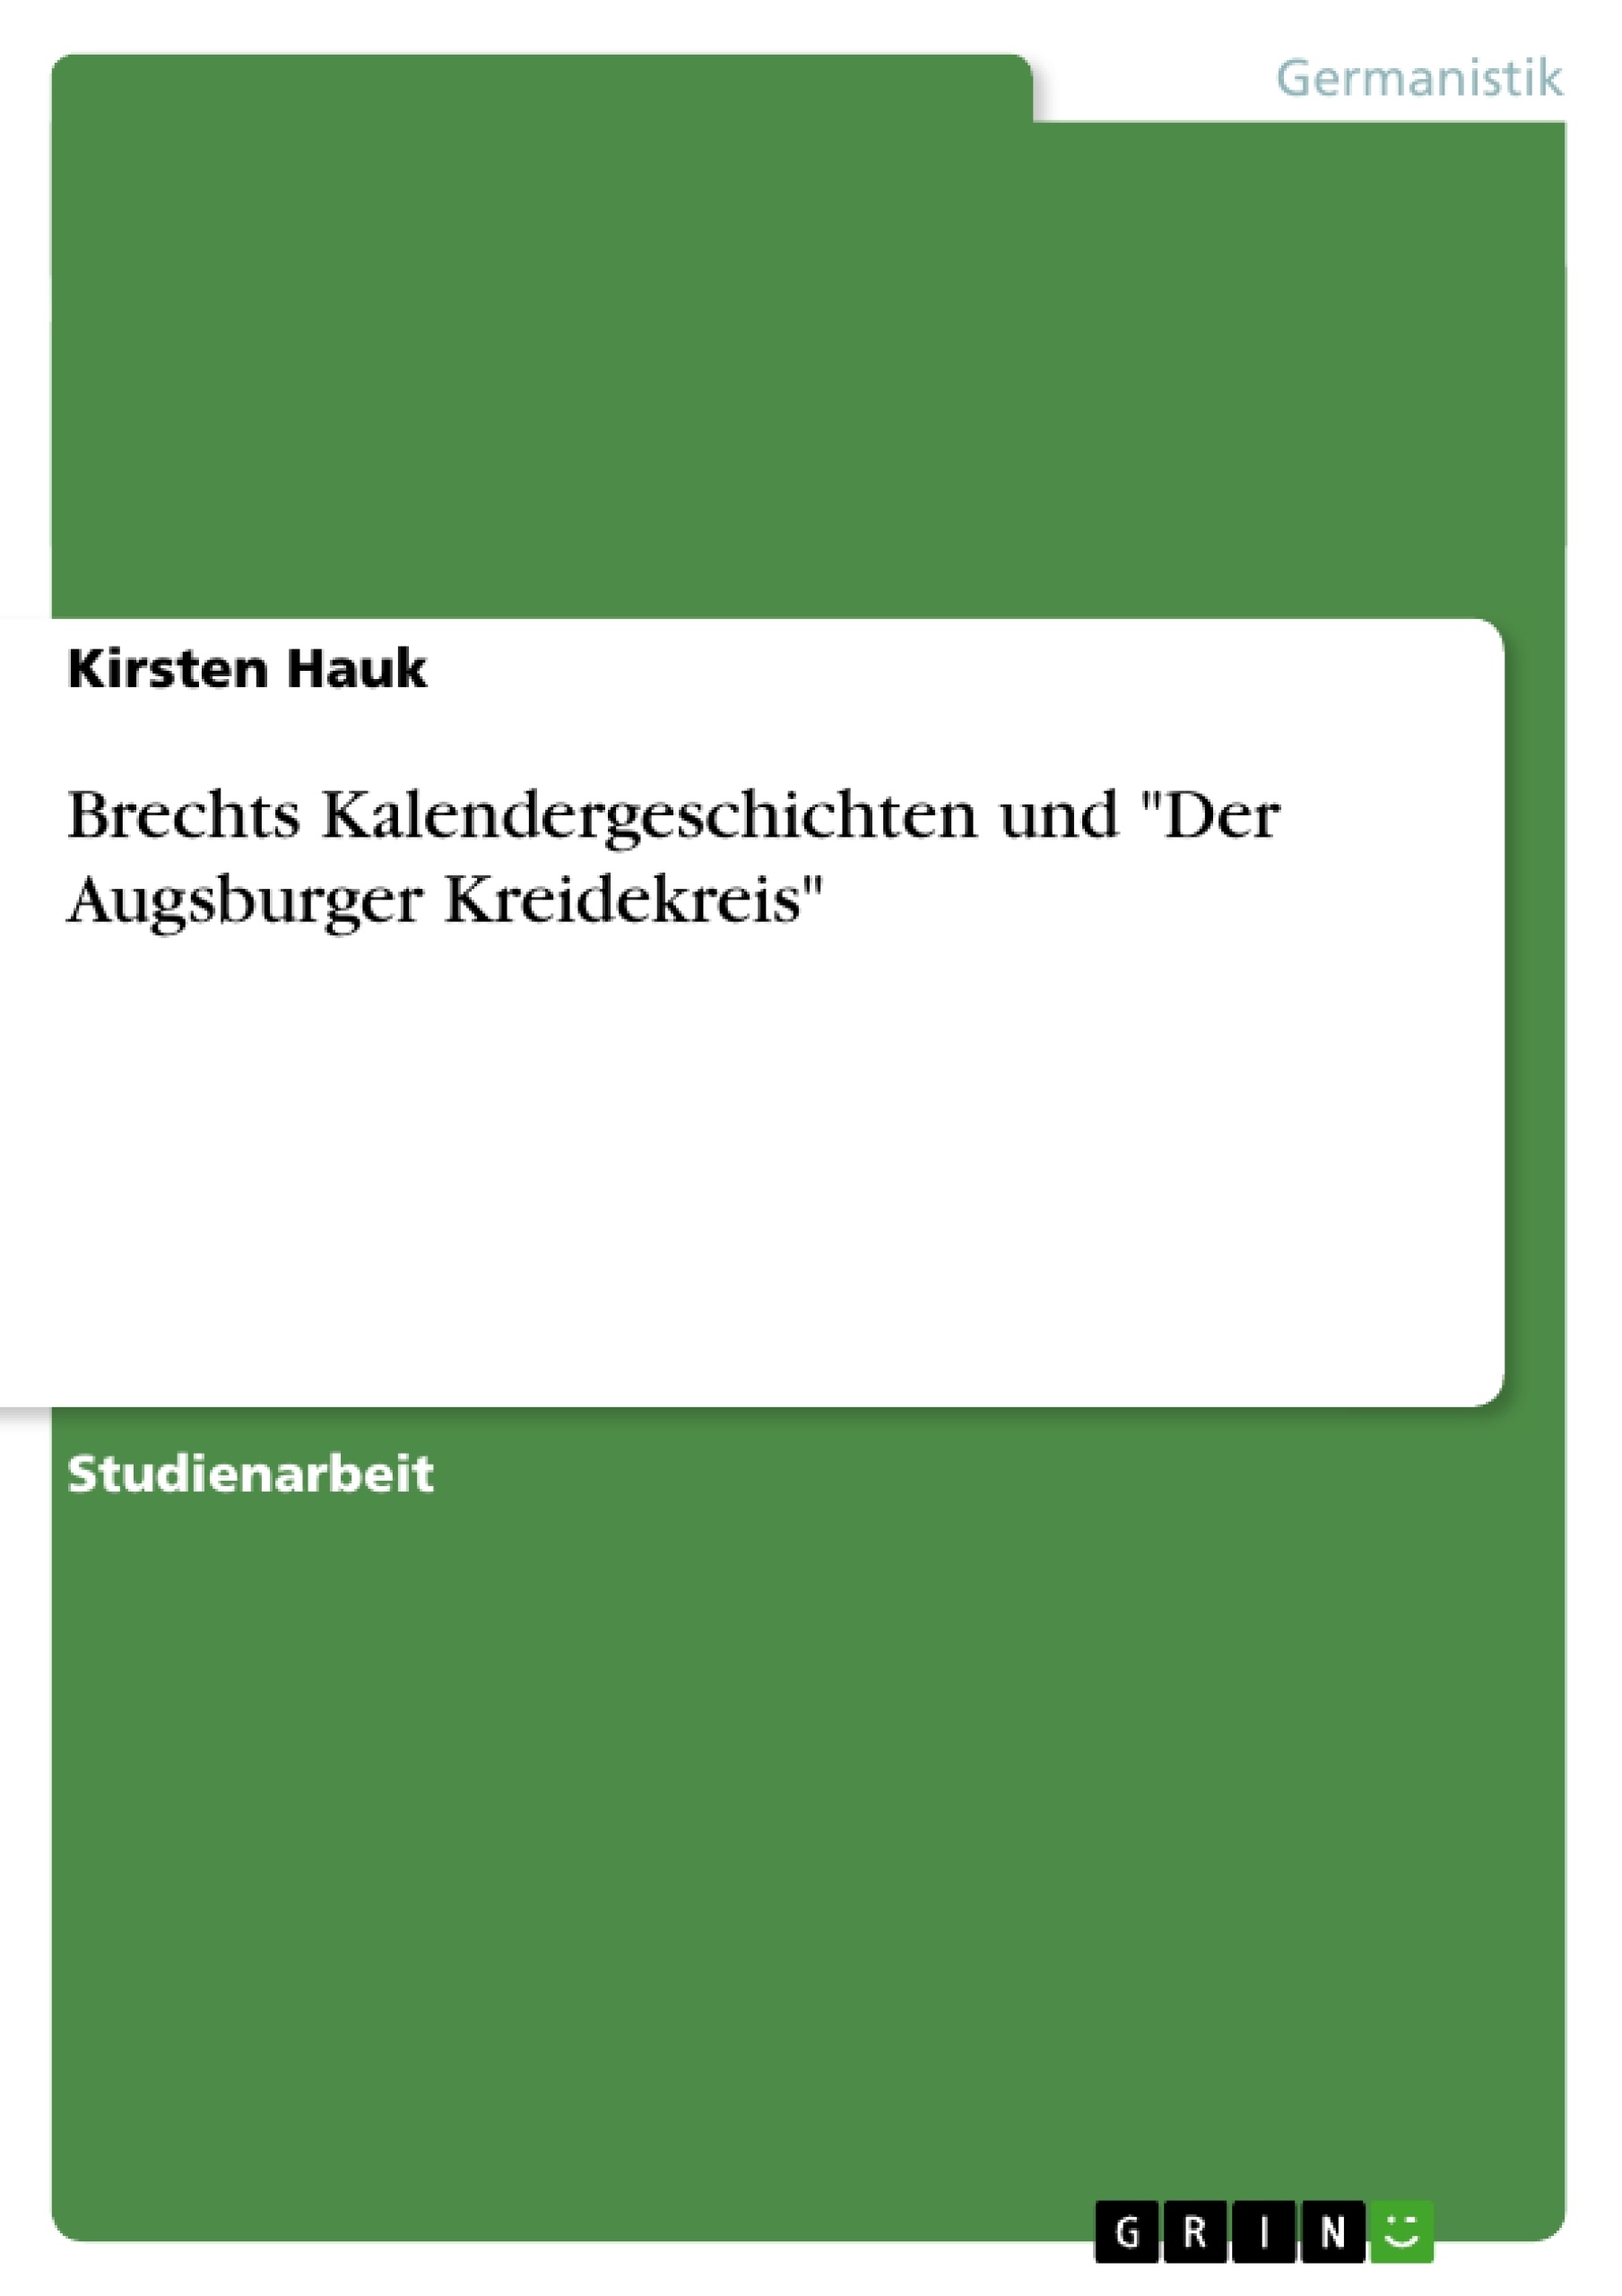 Titre: Brechts Kalendergeschichten und "Der Augsburger Kreidekreis"